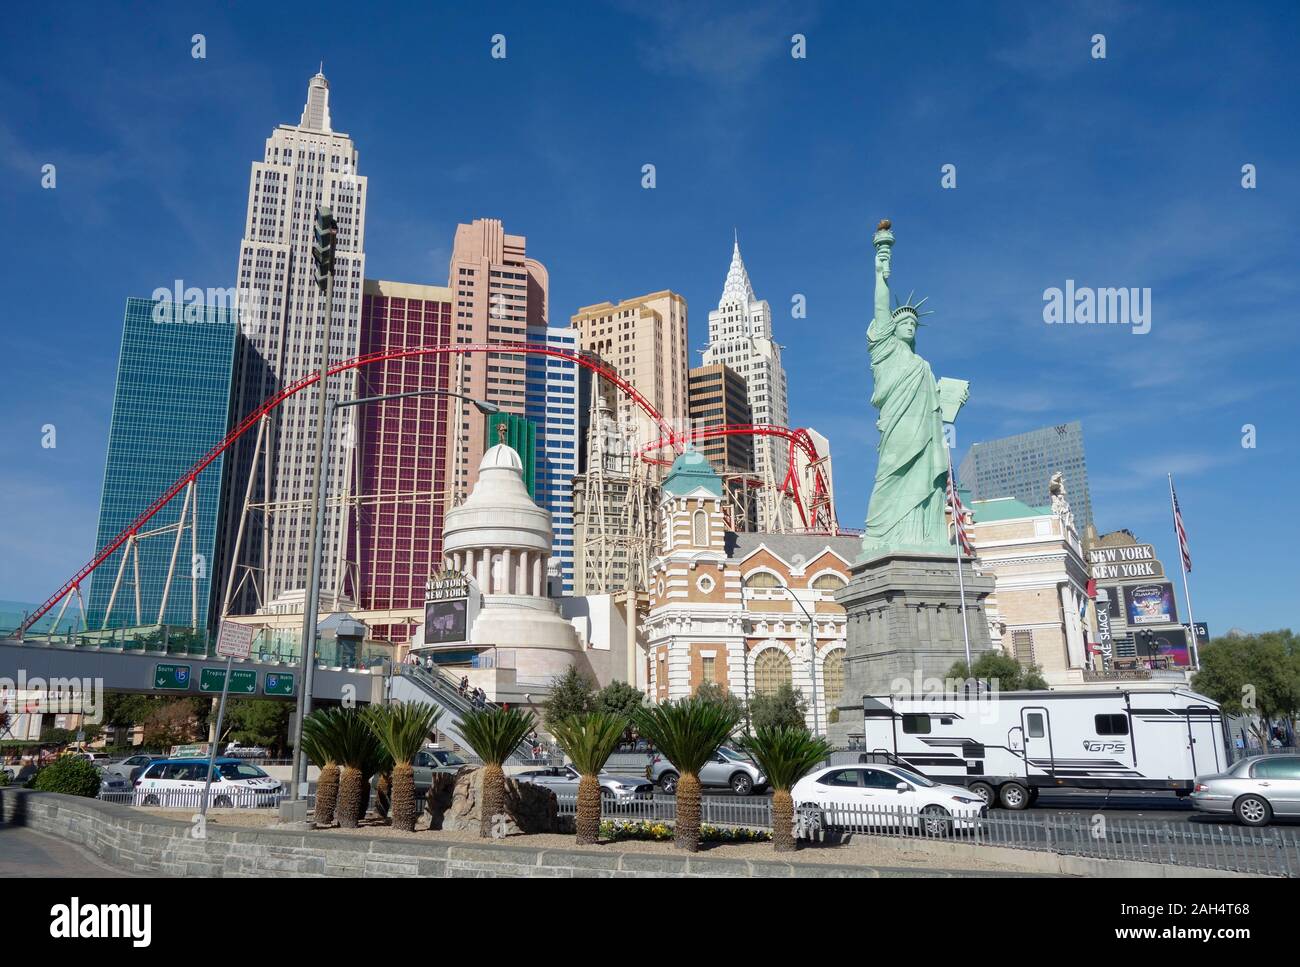 Hotel New York, Las Vegas, Nevada. Stock Photo